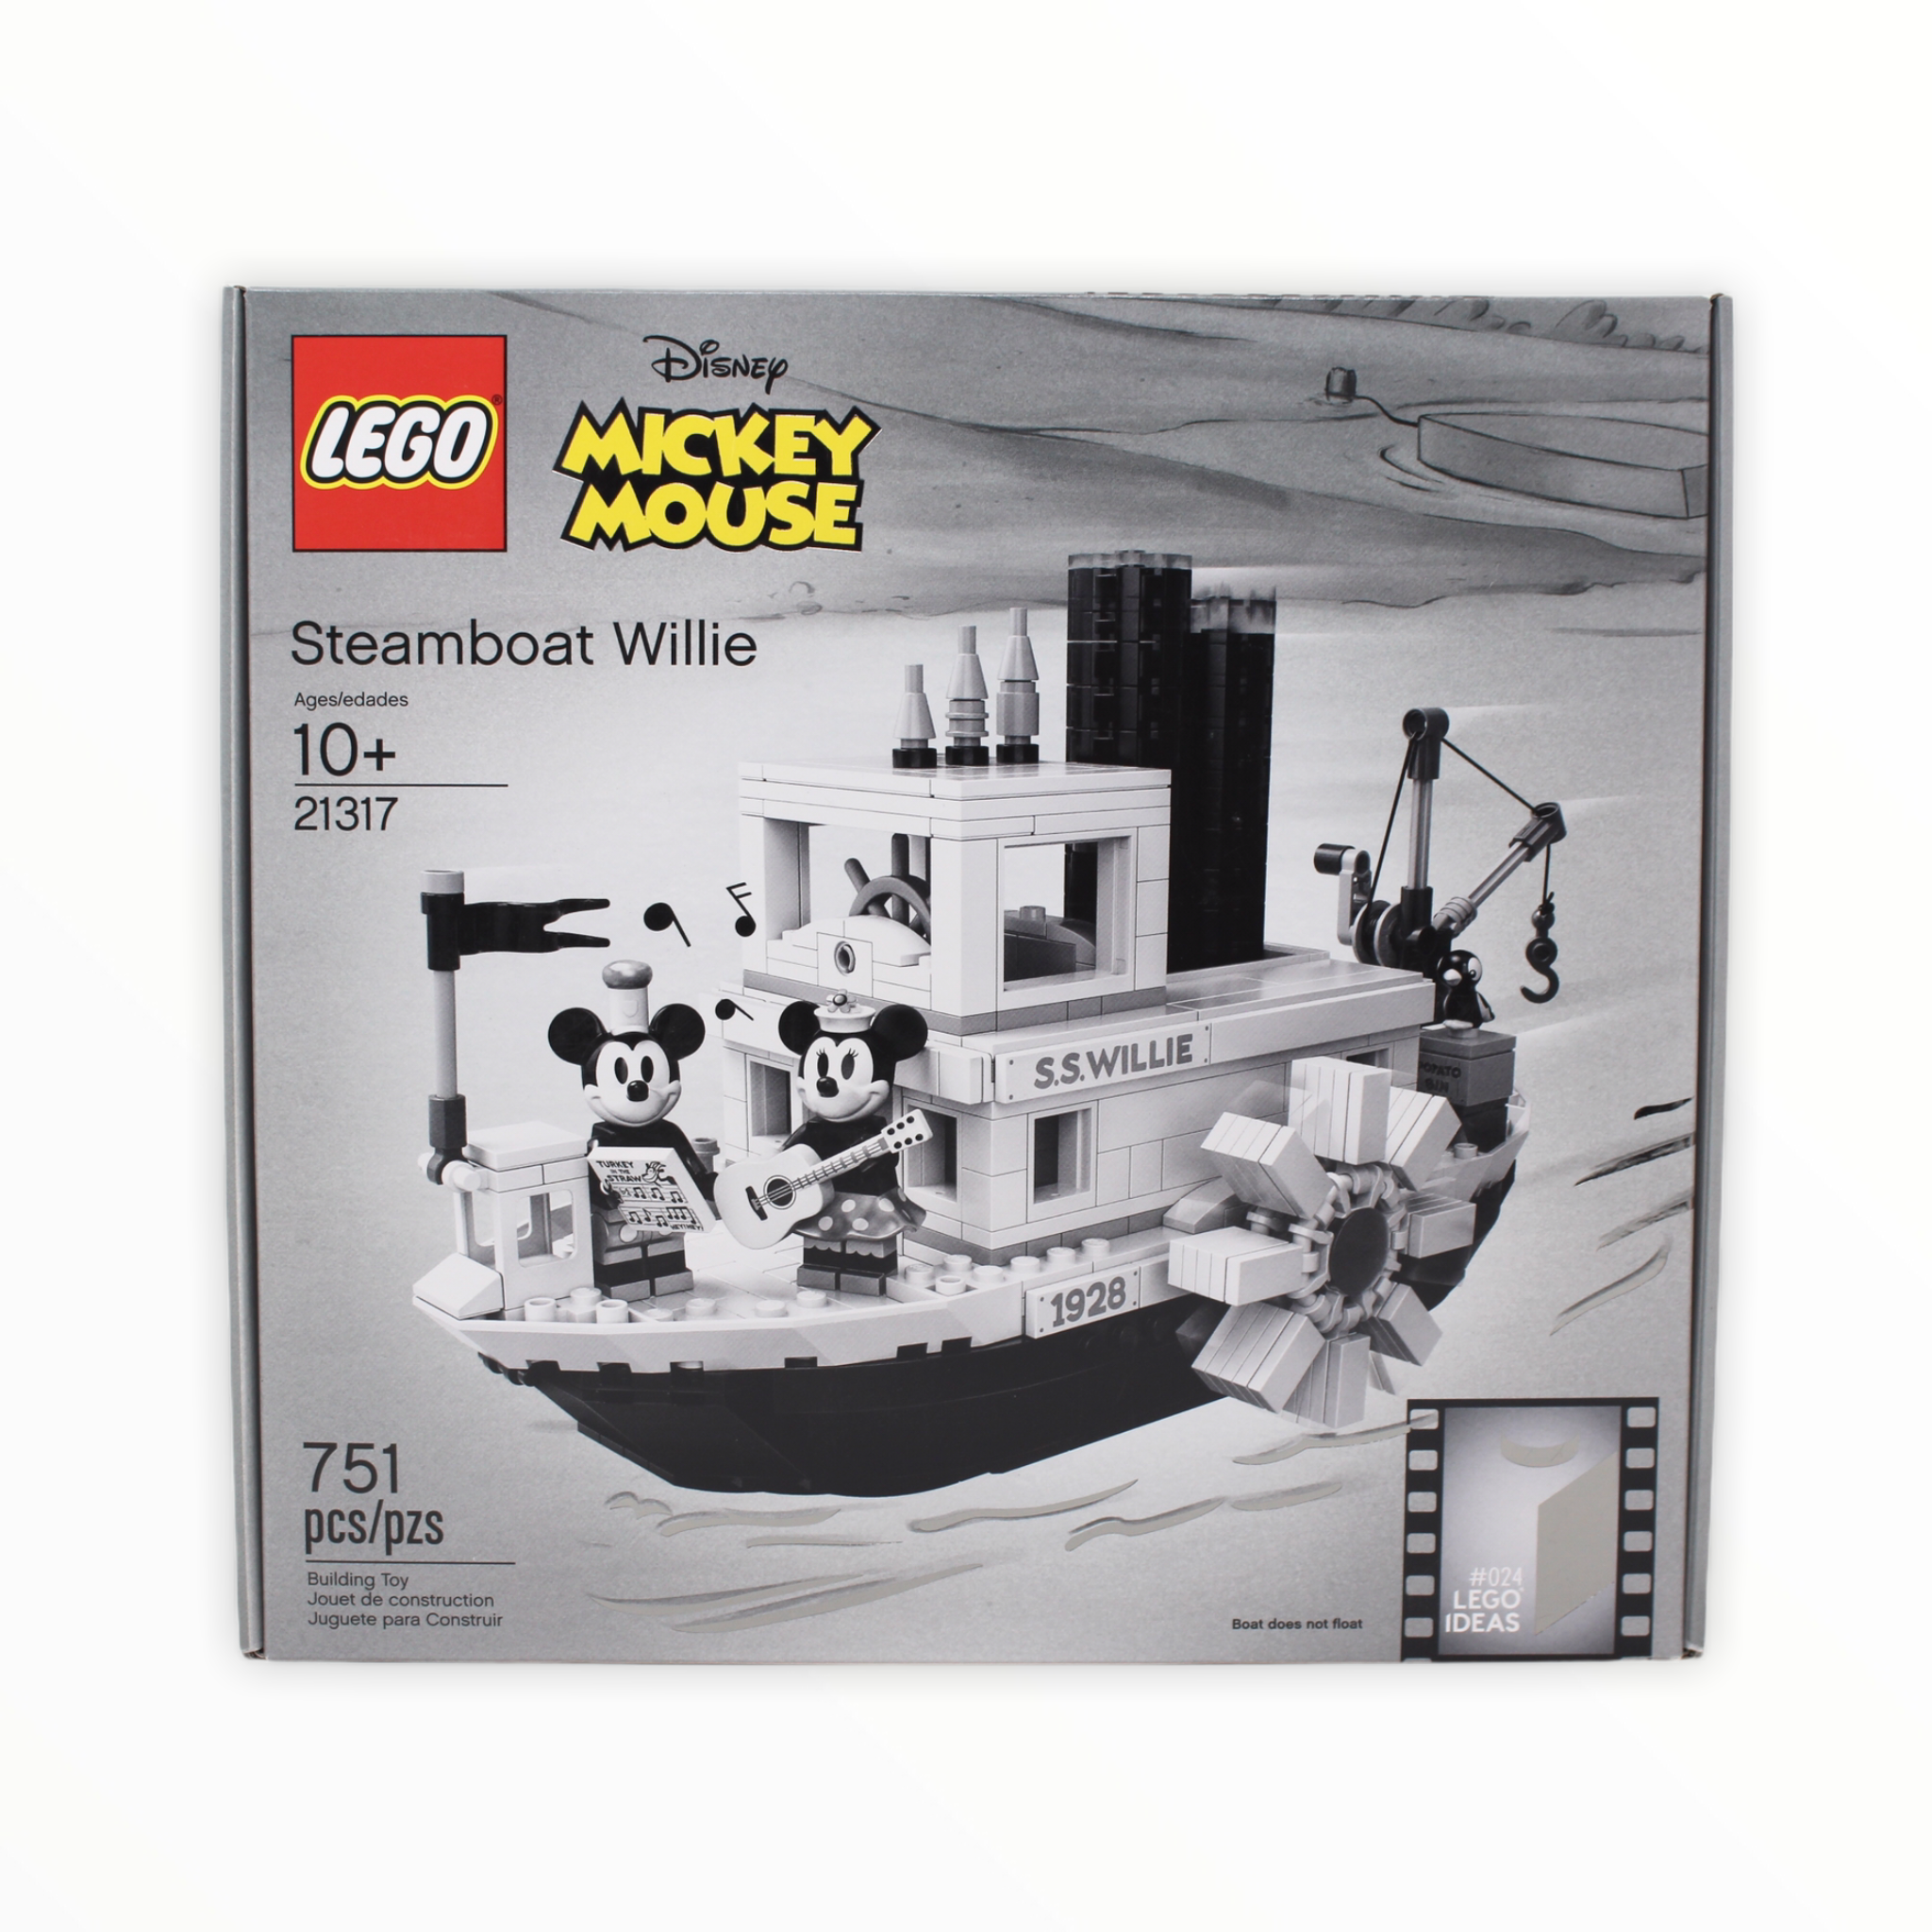 Retired Set 21317 LEGO Ideas Steamboat Willie